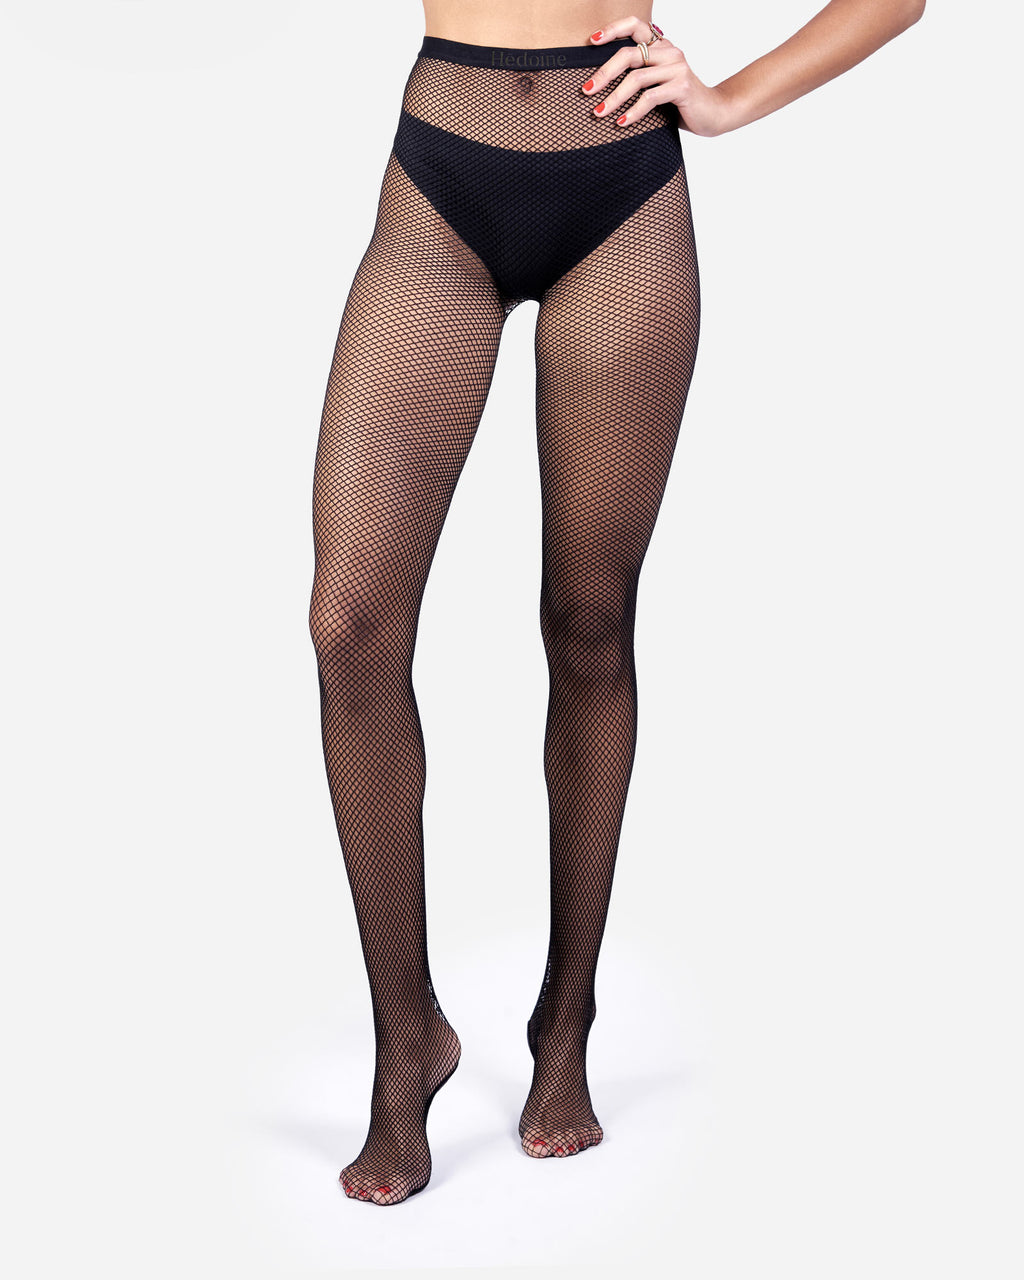 Madame So Fashion 73 fishnet tights in black